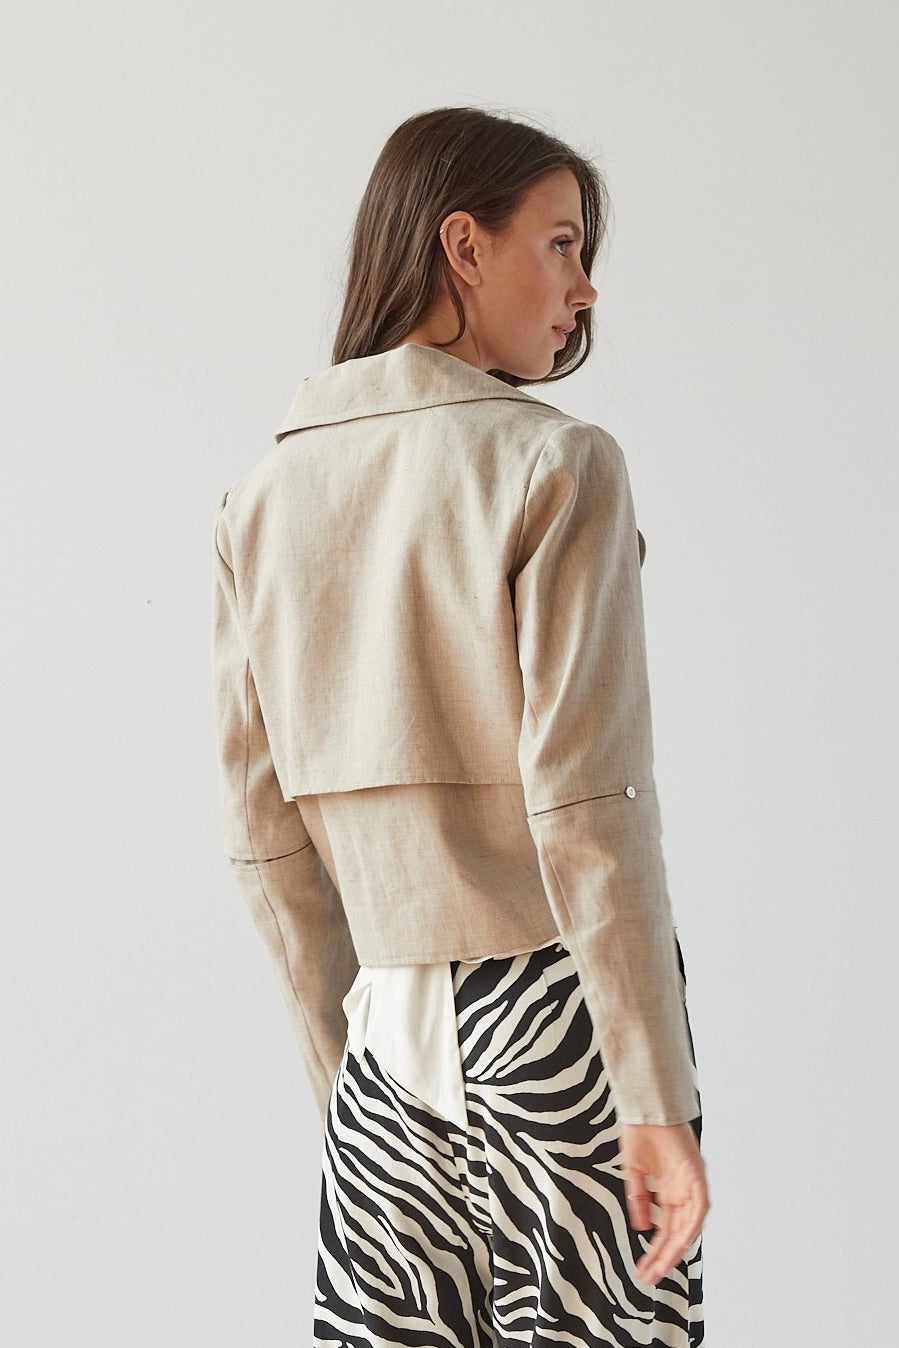 Adroit Atelier Ninon Linen Blend Jacket in Sand